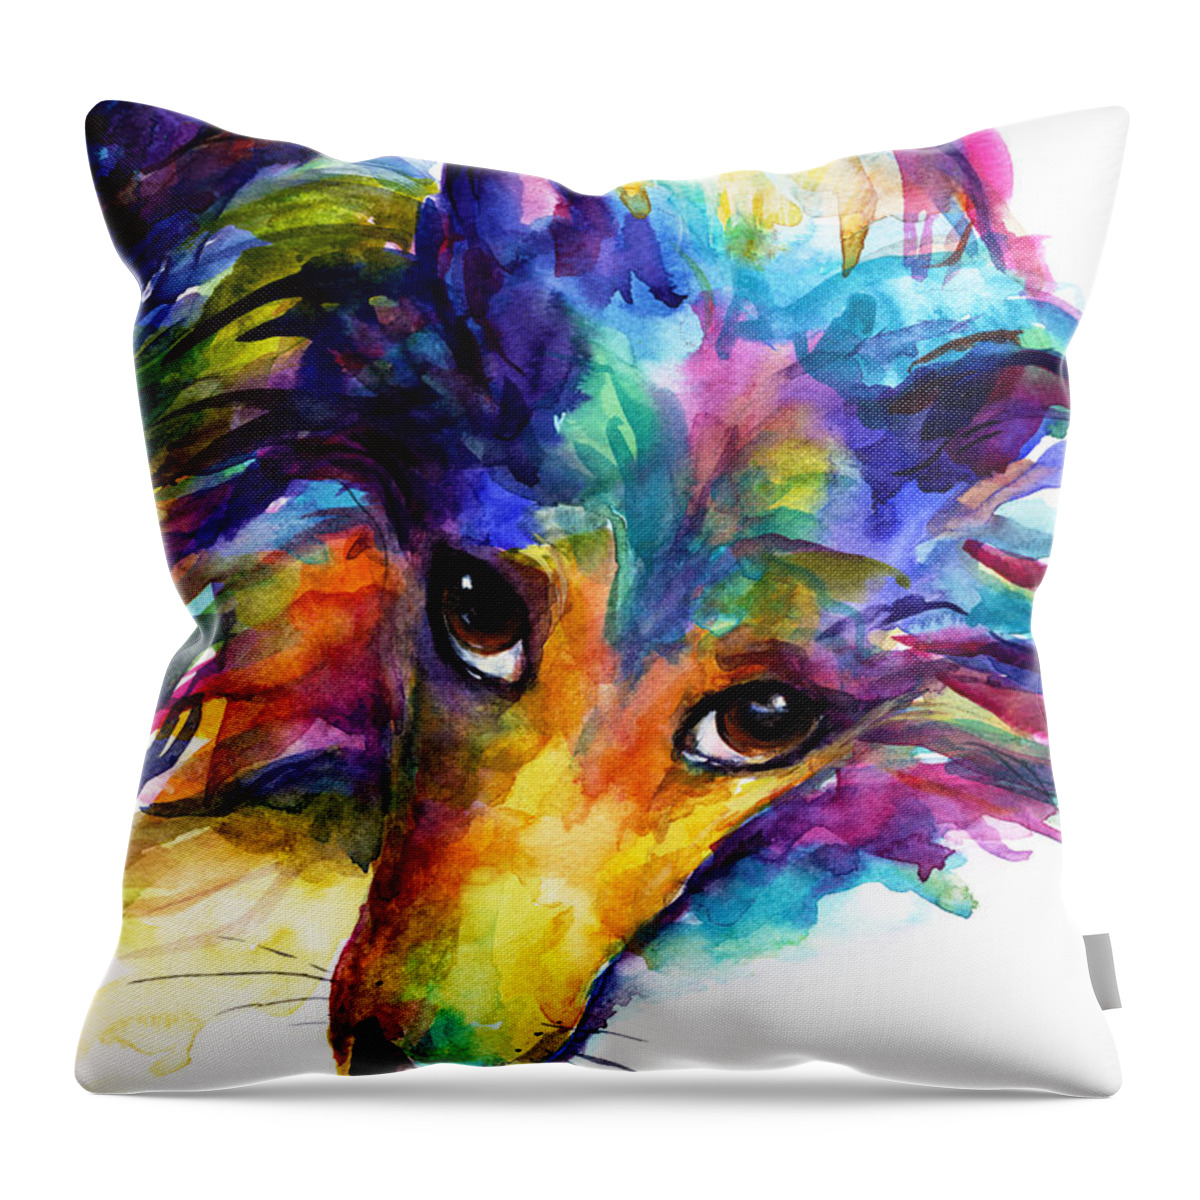 Sheltie Dog Throw Pillow featuring the painting Colorful Sheltie Dog portrait by Svetlana Novikova